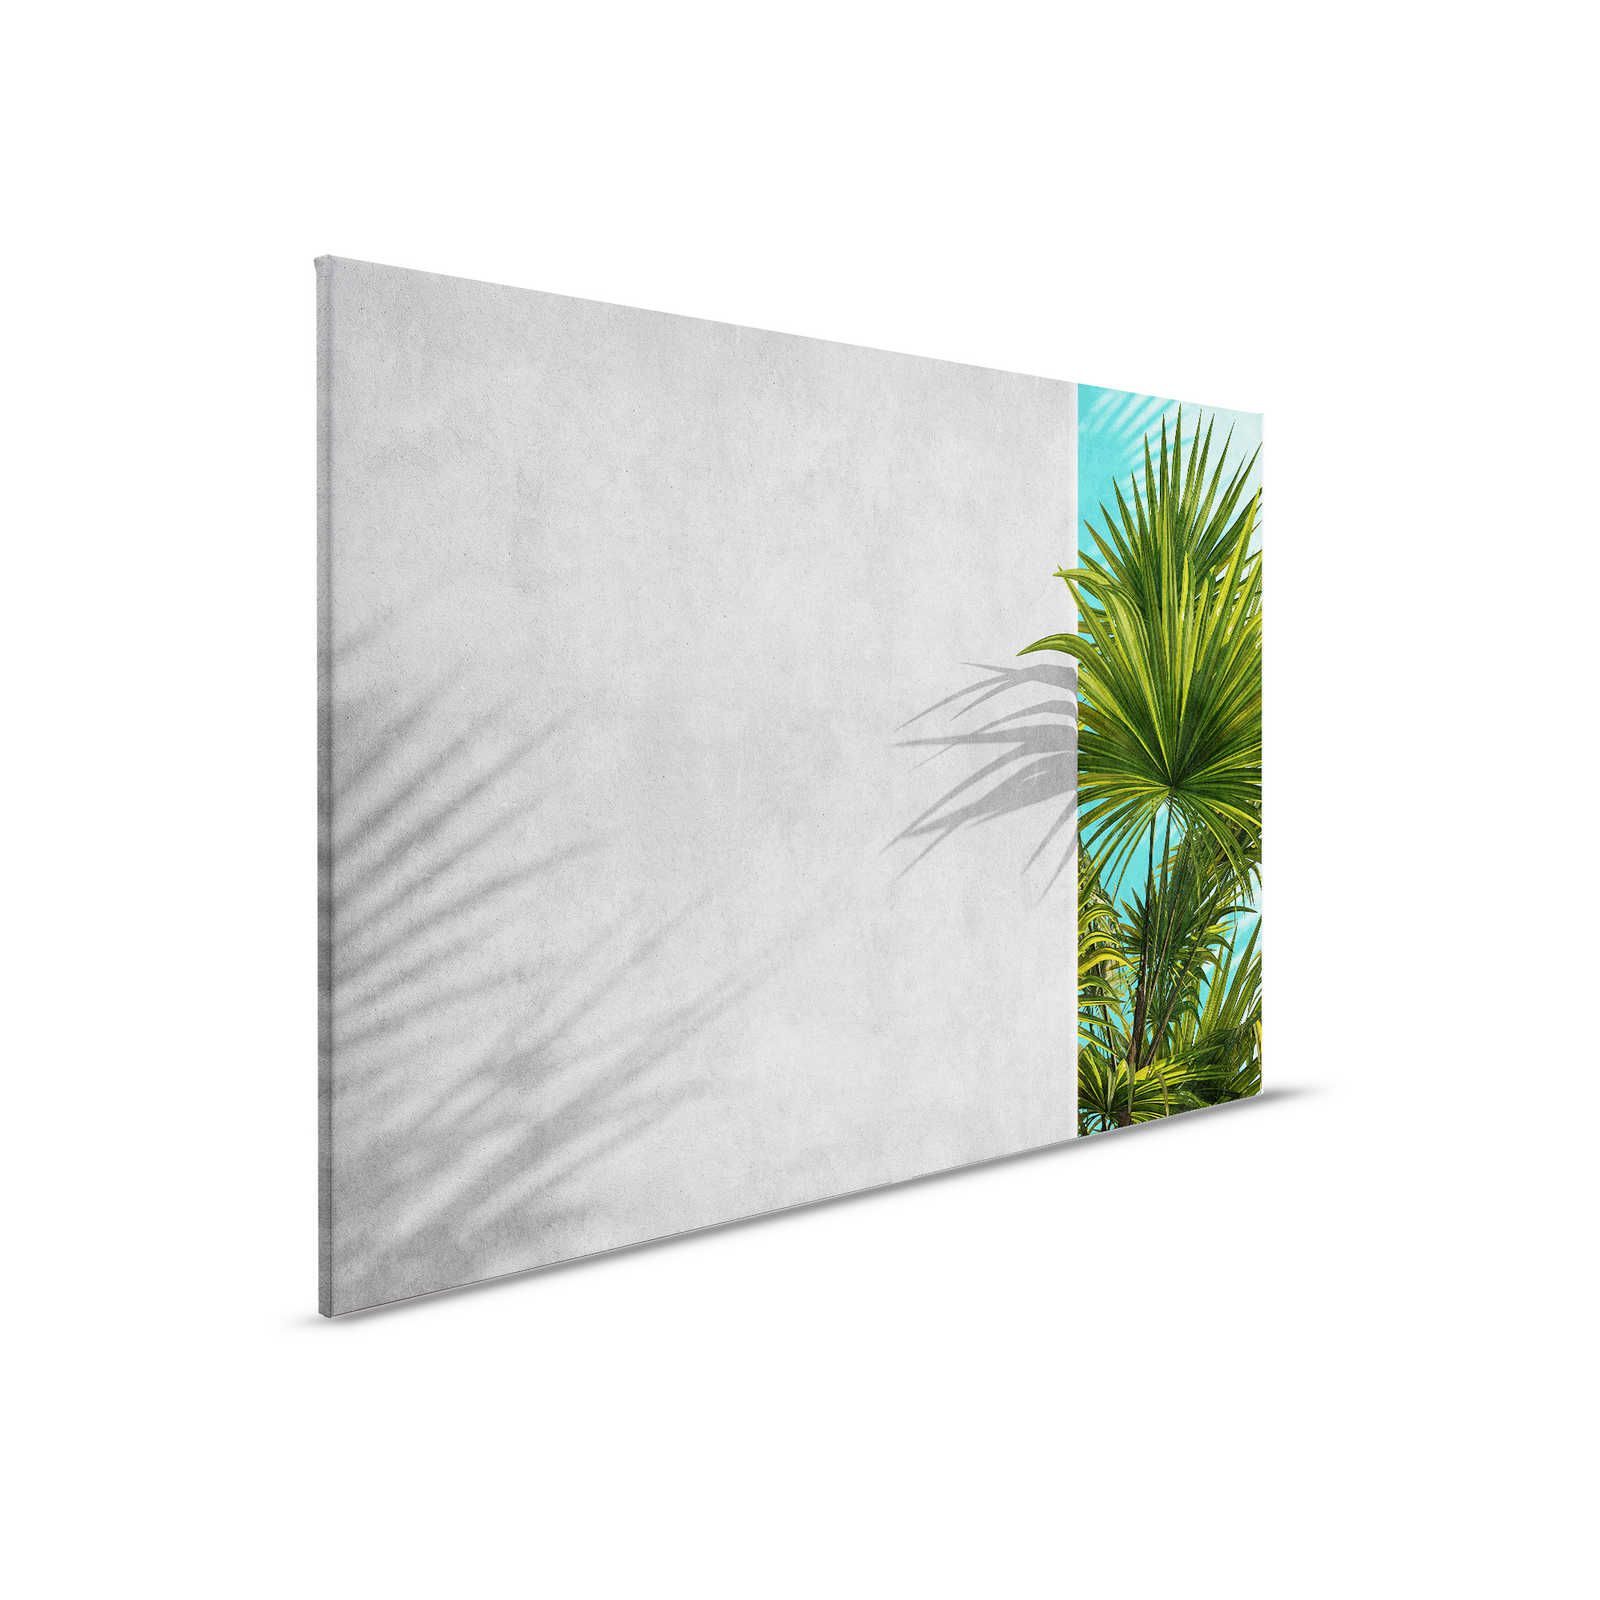         Tunis 2 - Canvas painting Indoor Garden Tunisia Grey & Turquoise - 0.90 m x 0.60 m
    